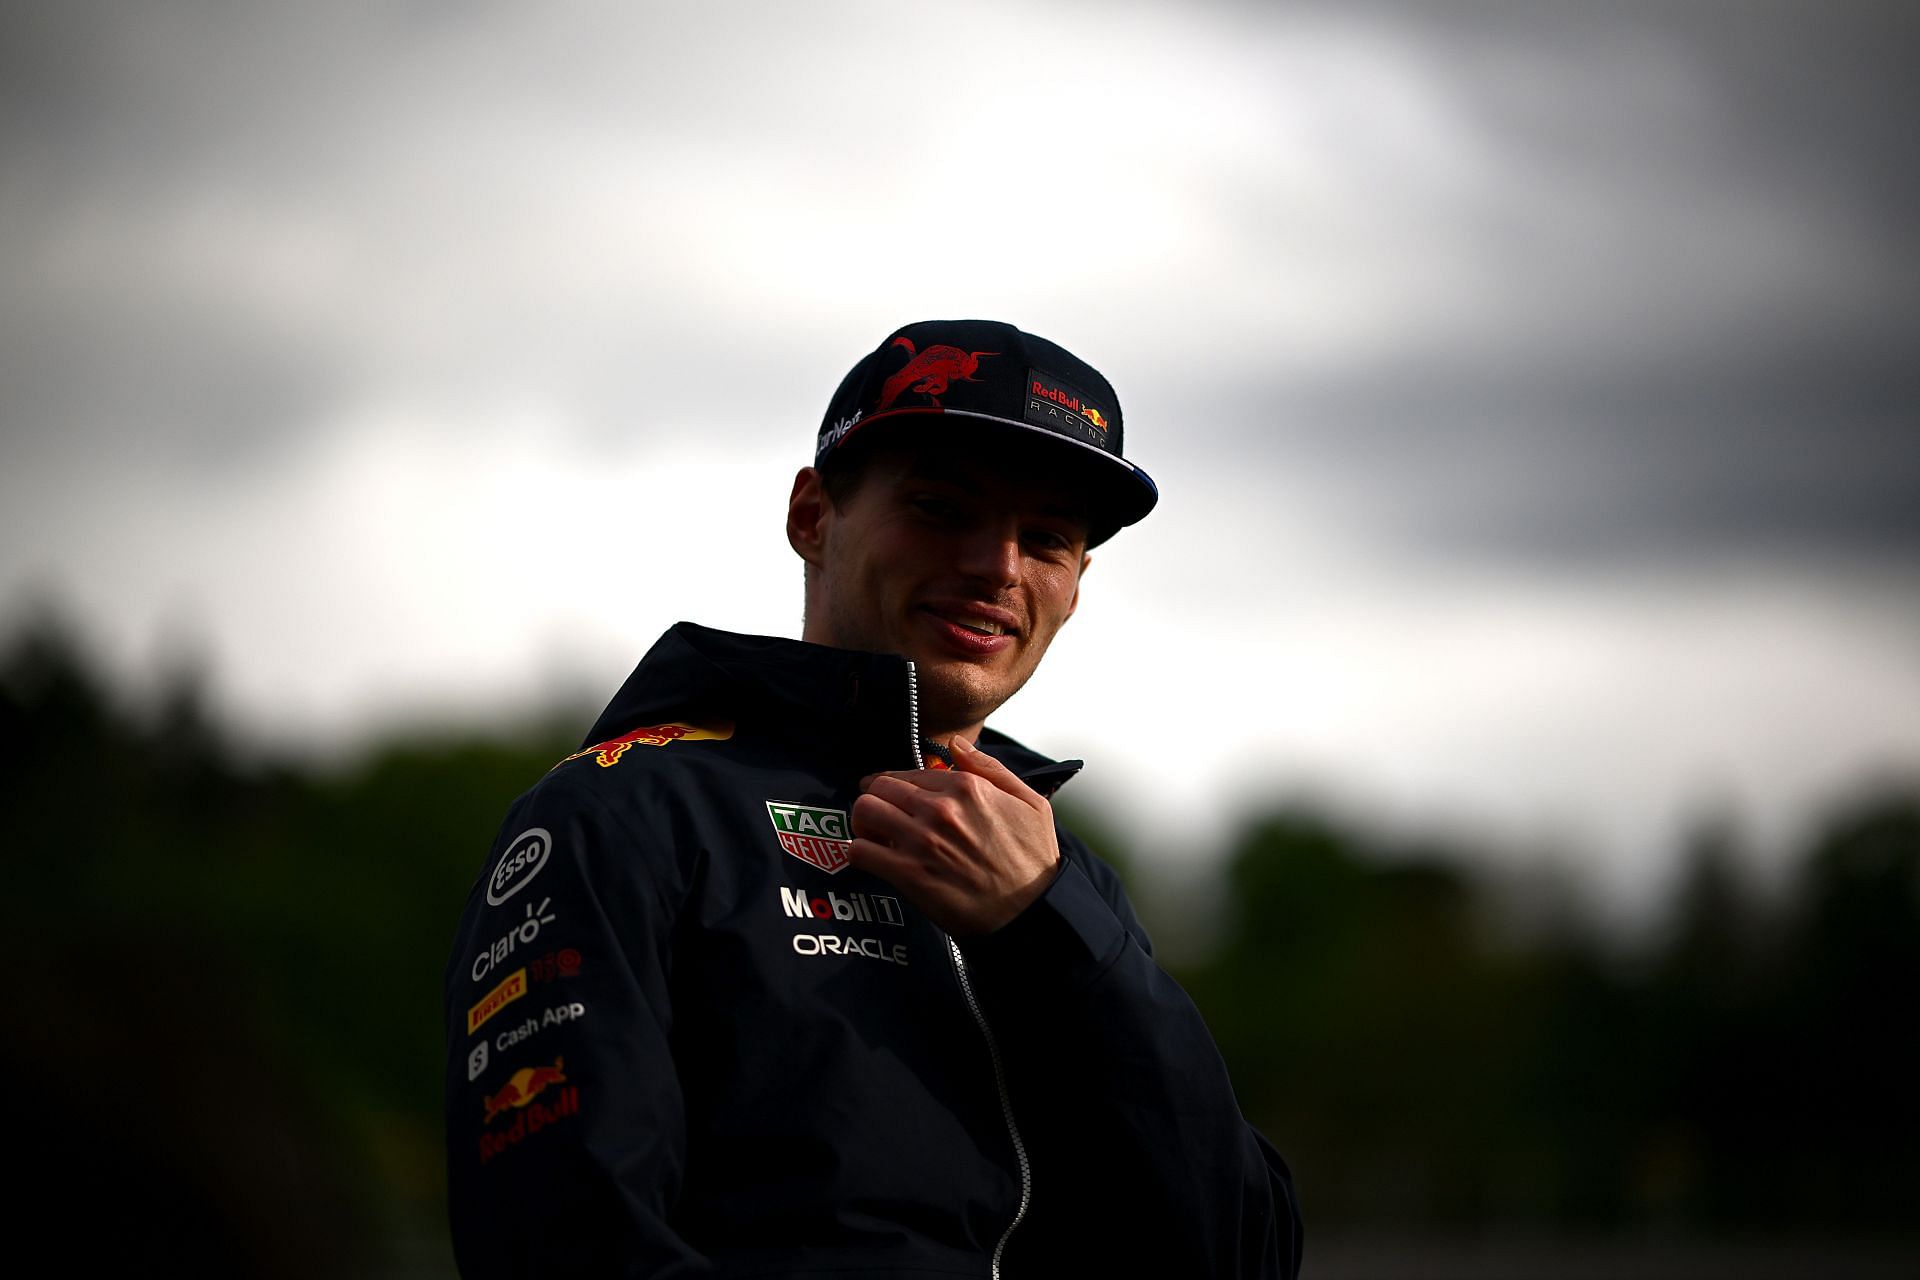 Max Verstappen at the F1 Grand Prix of Emilia Romagna